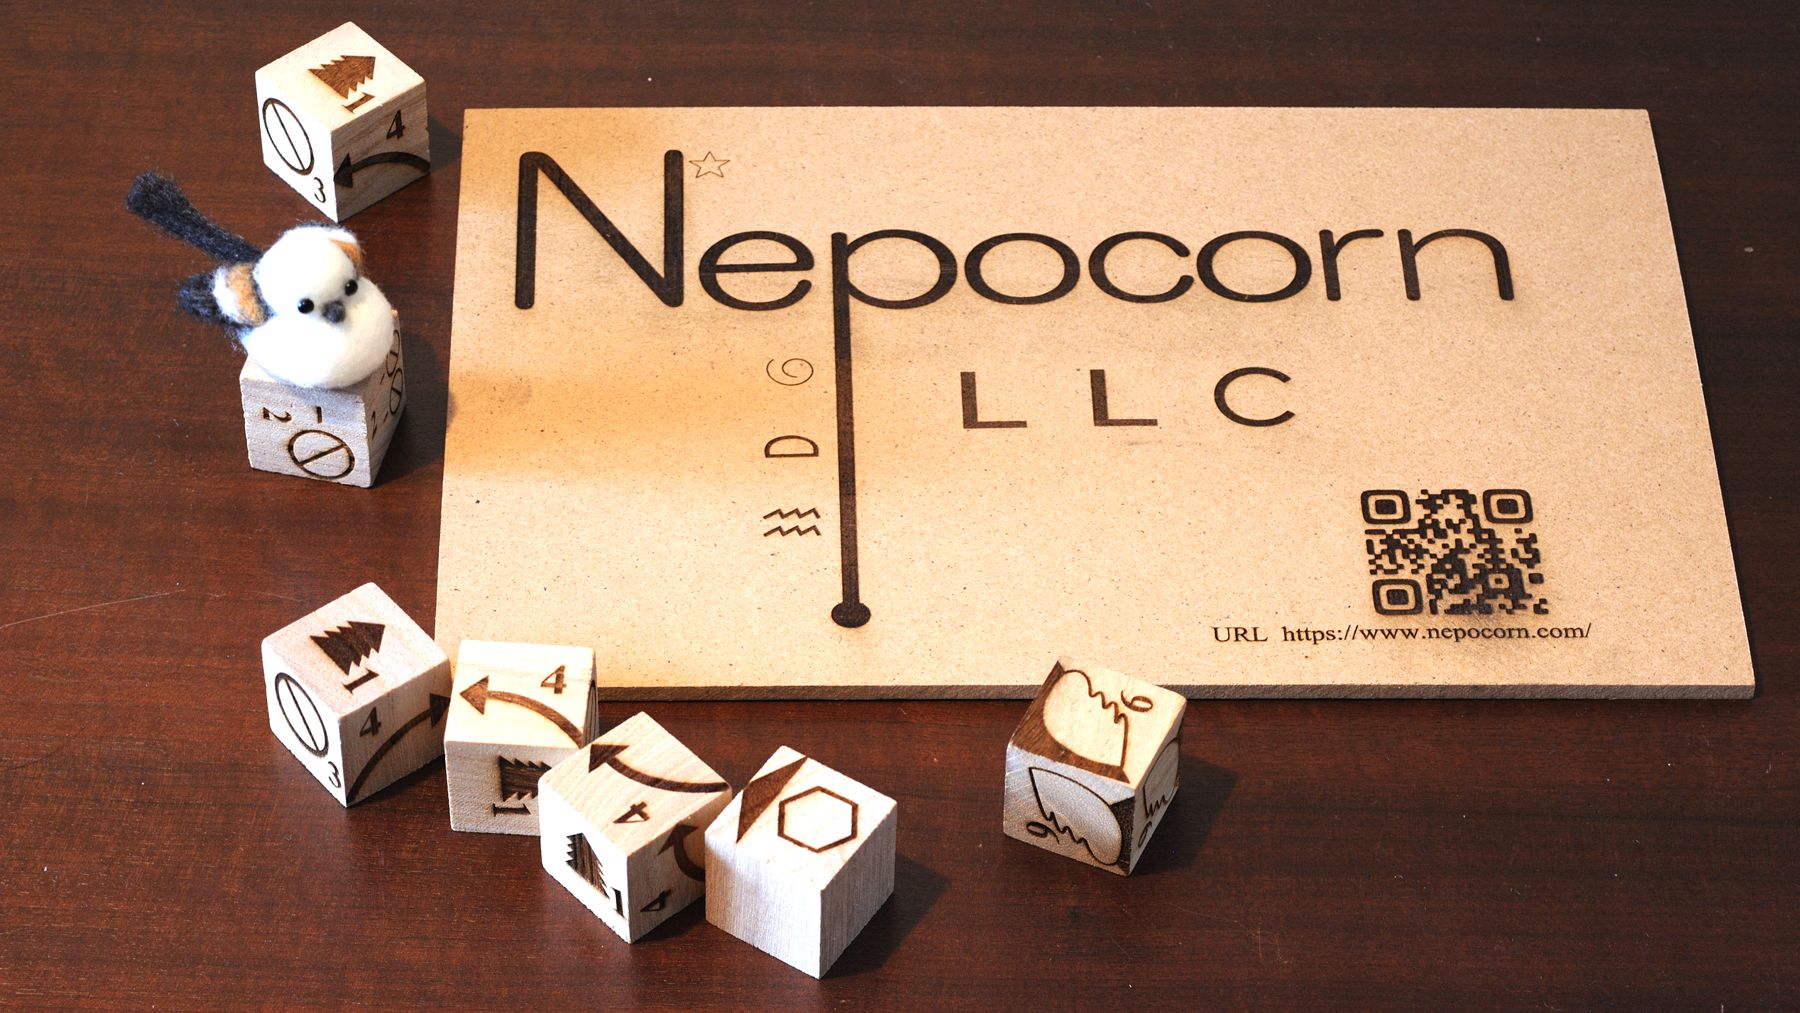 Nepocorn LLC